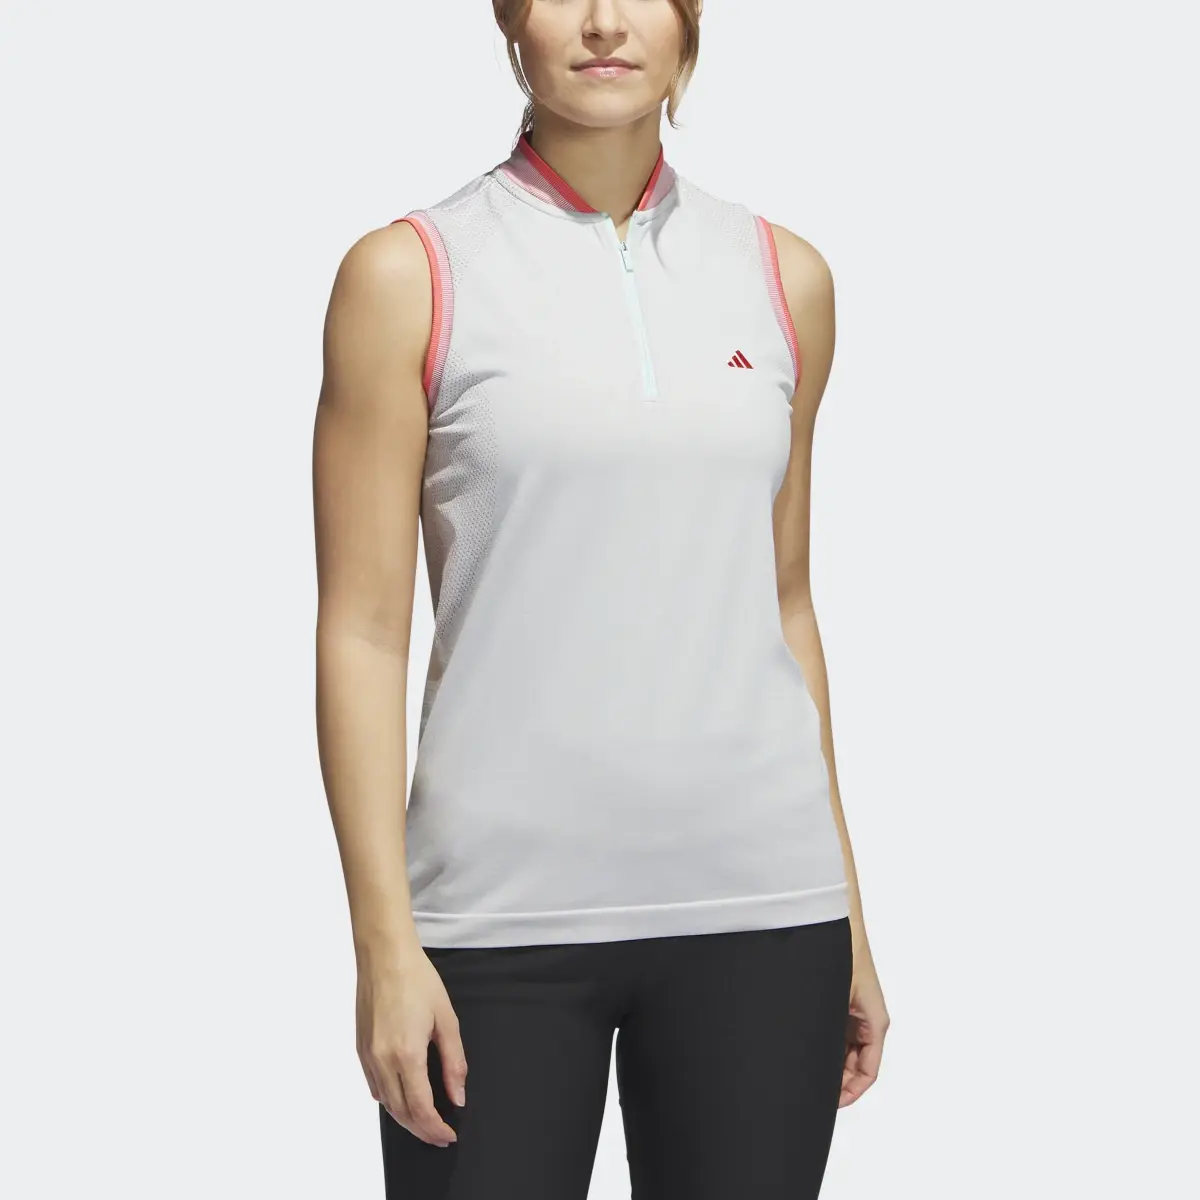 Adidas Ultimate365 Tour PRIMEKNIT Sleeveless Polo Shirt. 1